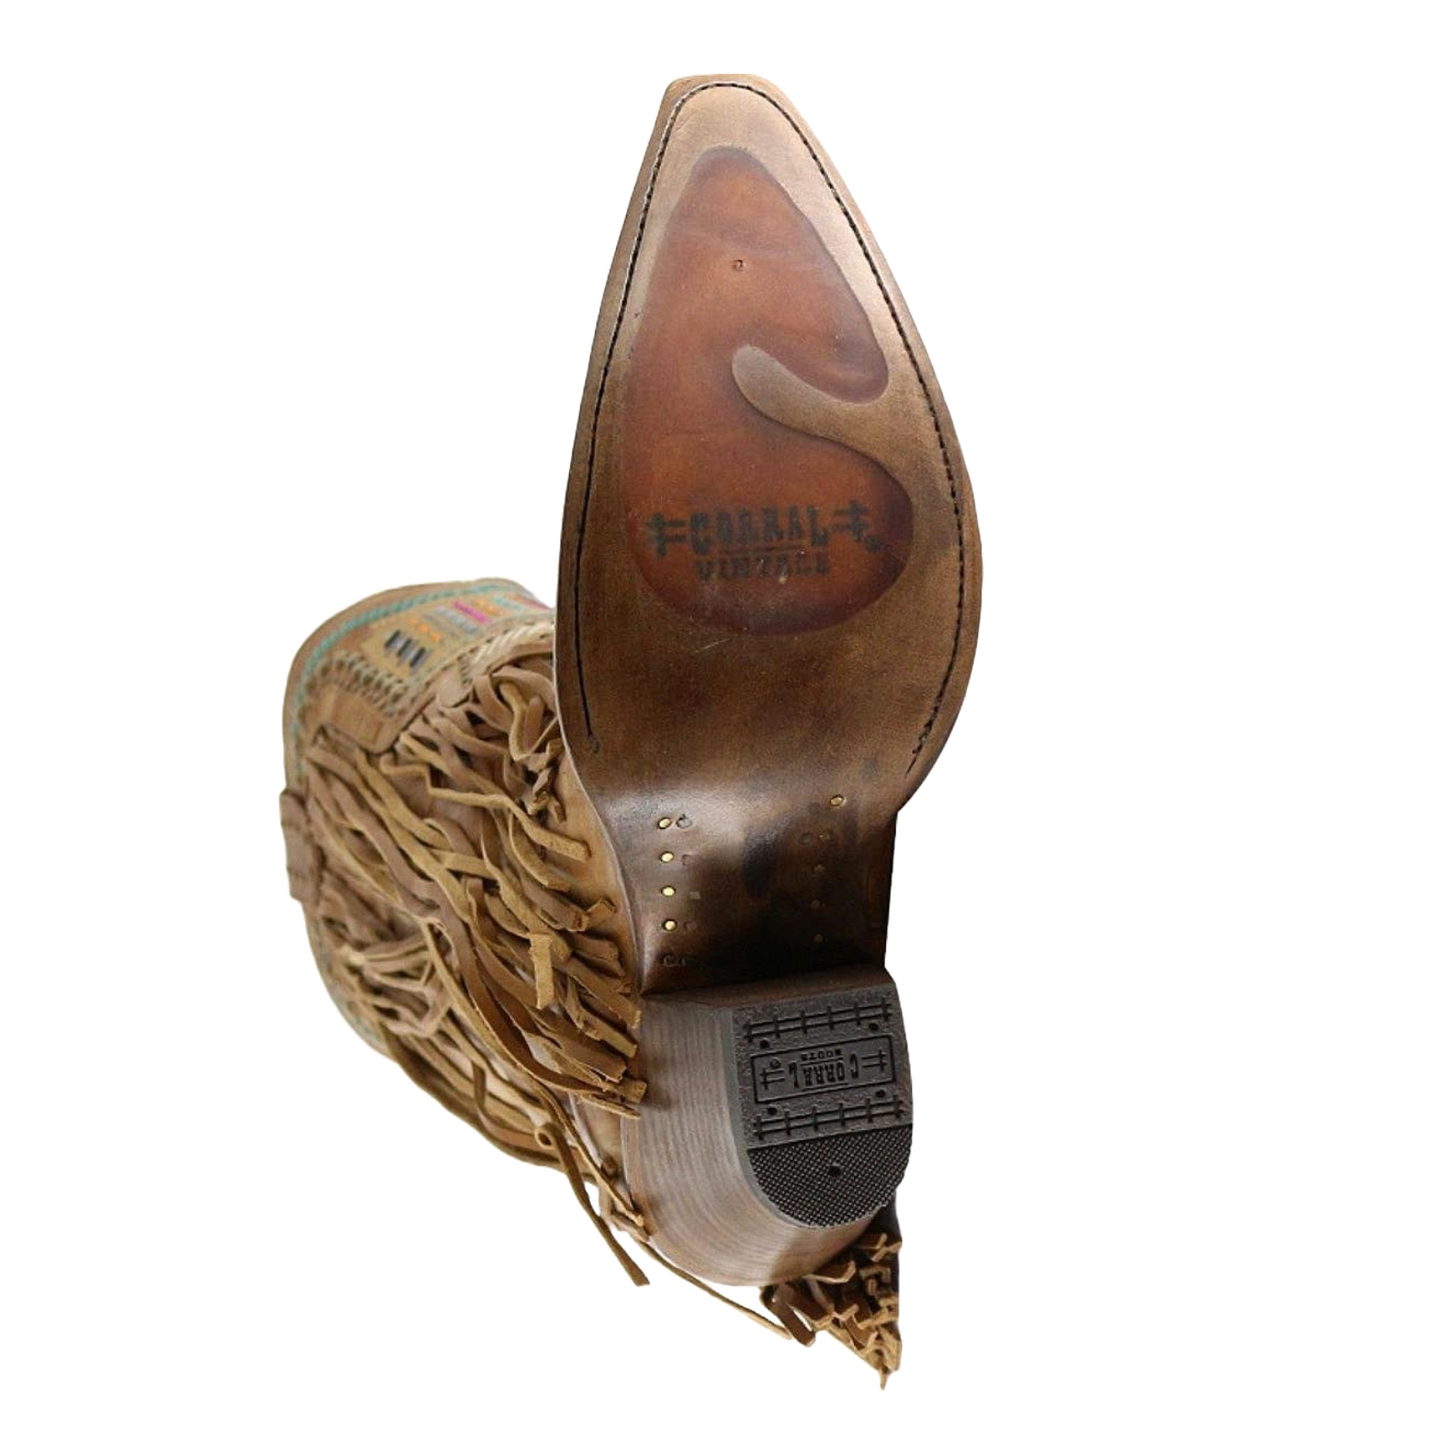 Corral Ladies Brown & Multicolor Crystal Fringe Snip Toe Boots C2910